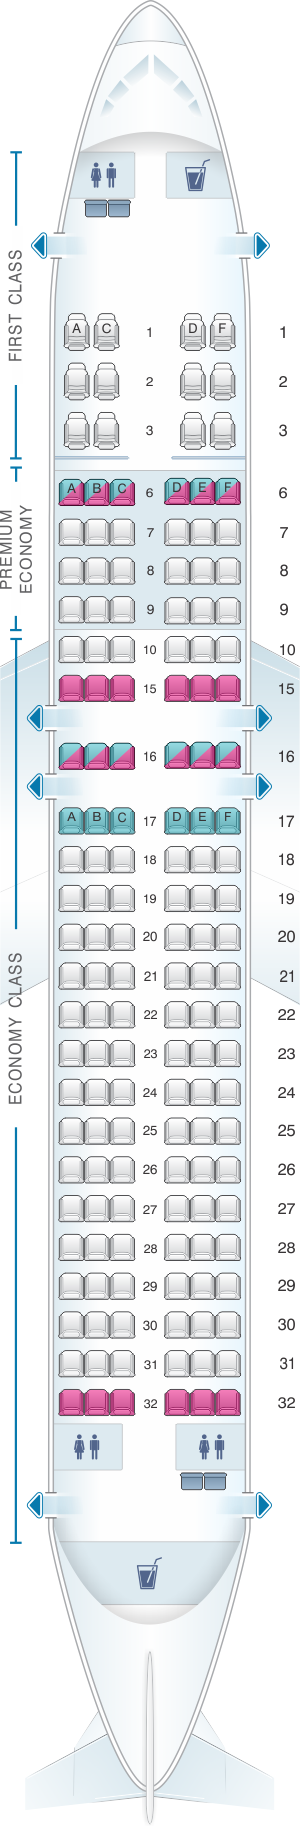 Seat map for Alaska Airlines - Horizon Air Airbus A320 214 sharklet retrofit